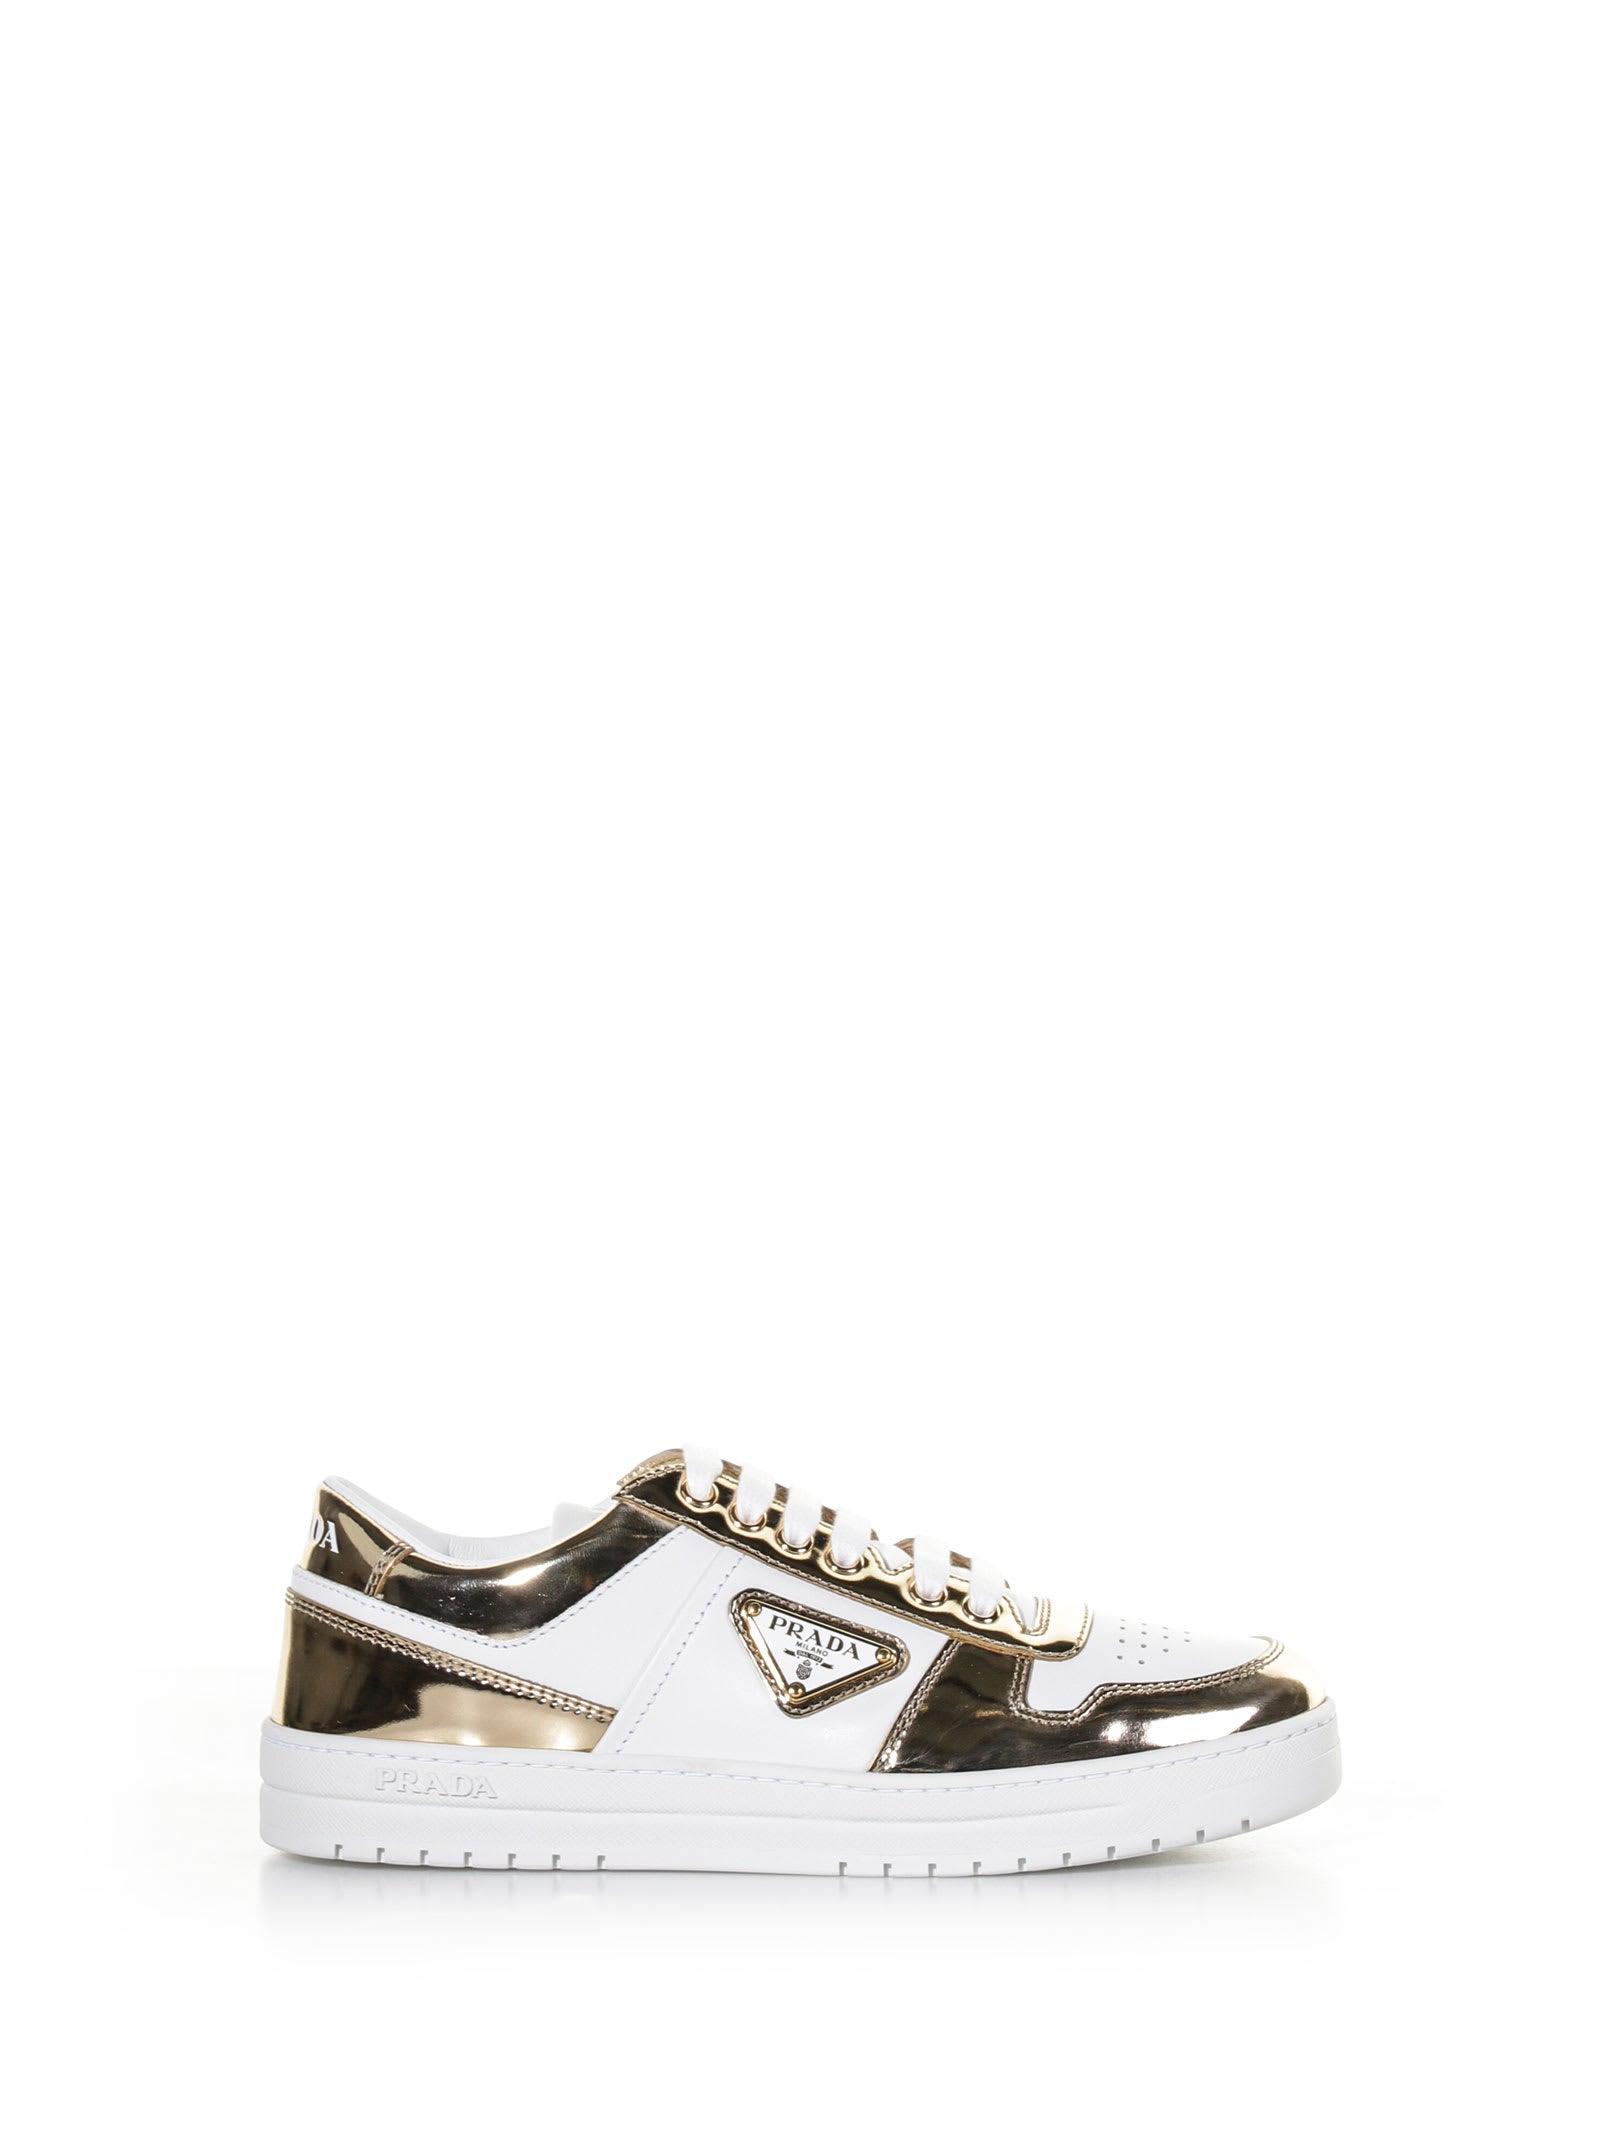 Prada Downtown Sneakers In Metallic Leather in White | Lyst